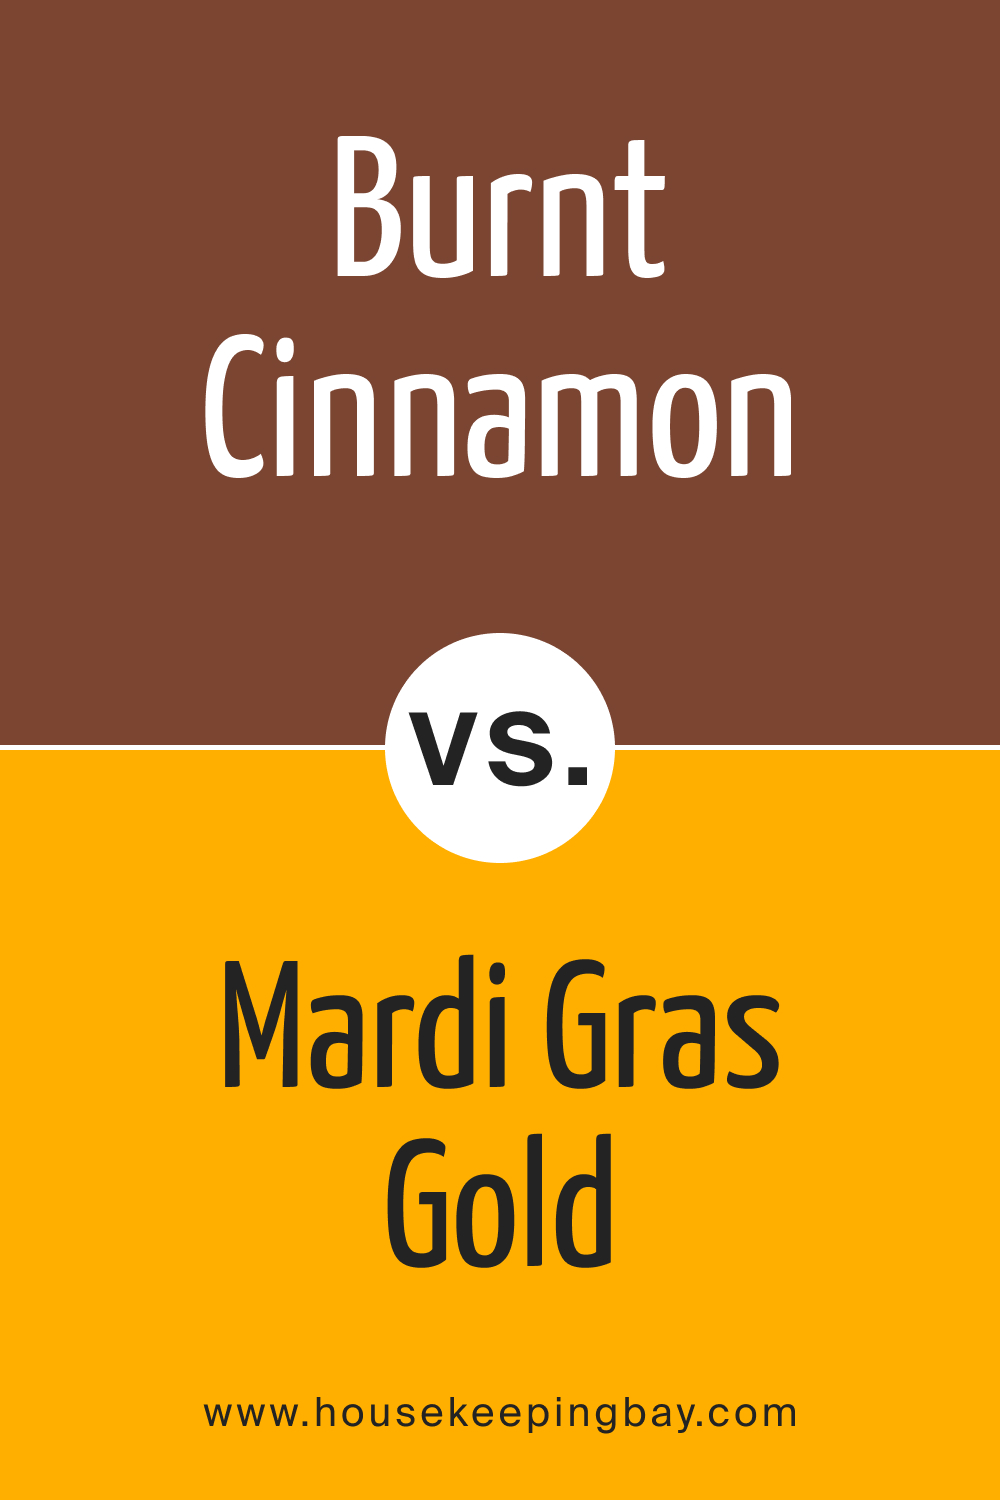 BM Burnt Cinnamon 2094-10 vs. BM 2019-10 Mardi Gras Gold